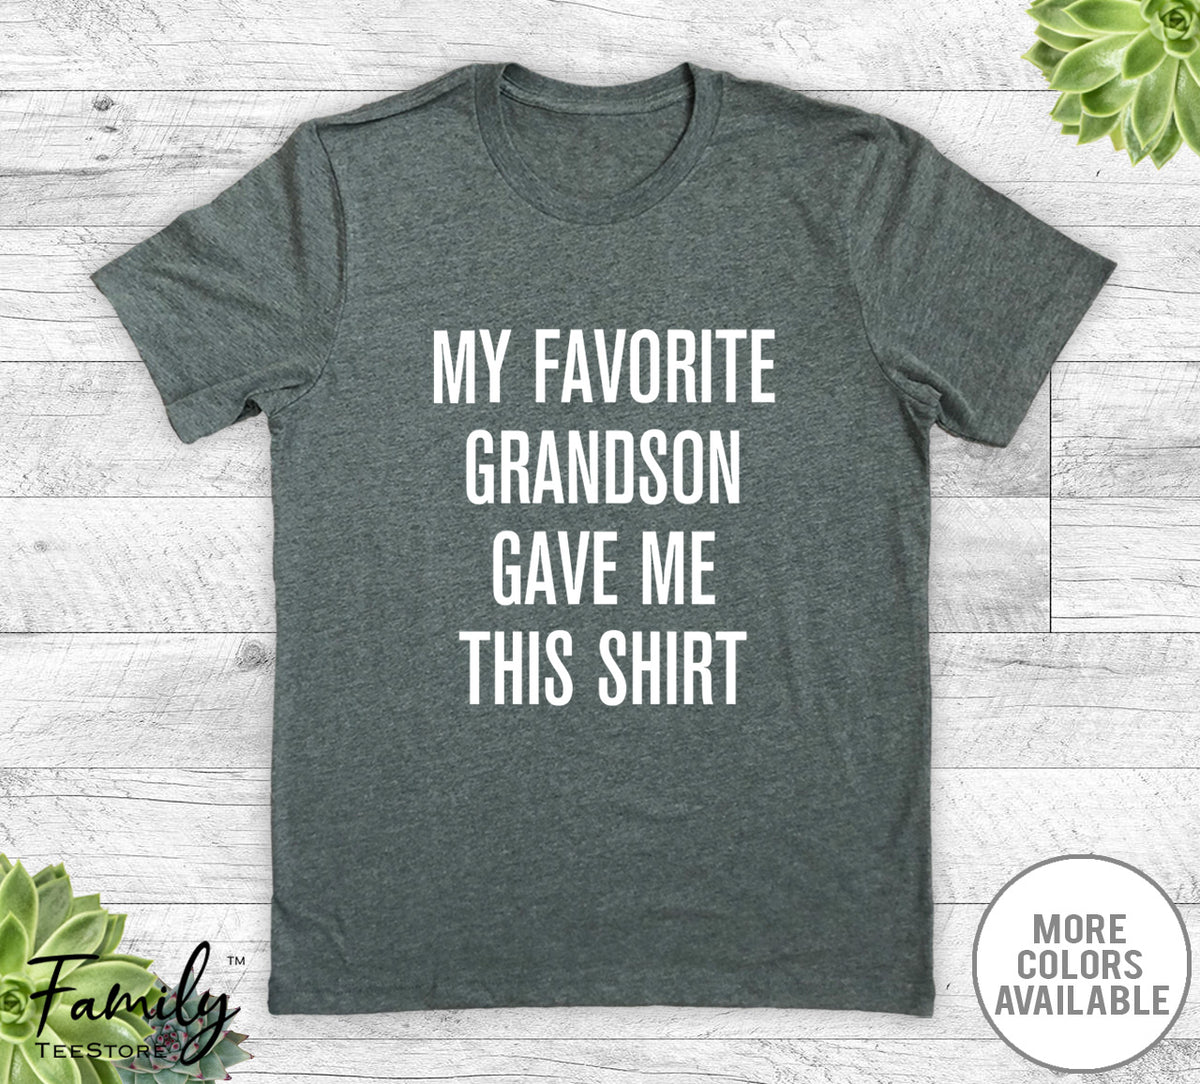 My Favorite Grandson Gave Me This Shirt - Unisex T-shirt - Grandpa Shirt - Grandpa Gift - familyteeprints